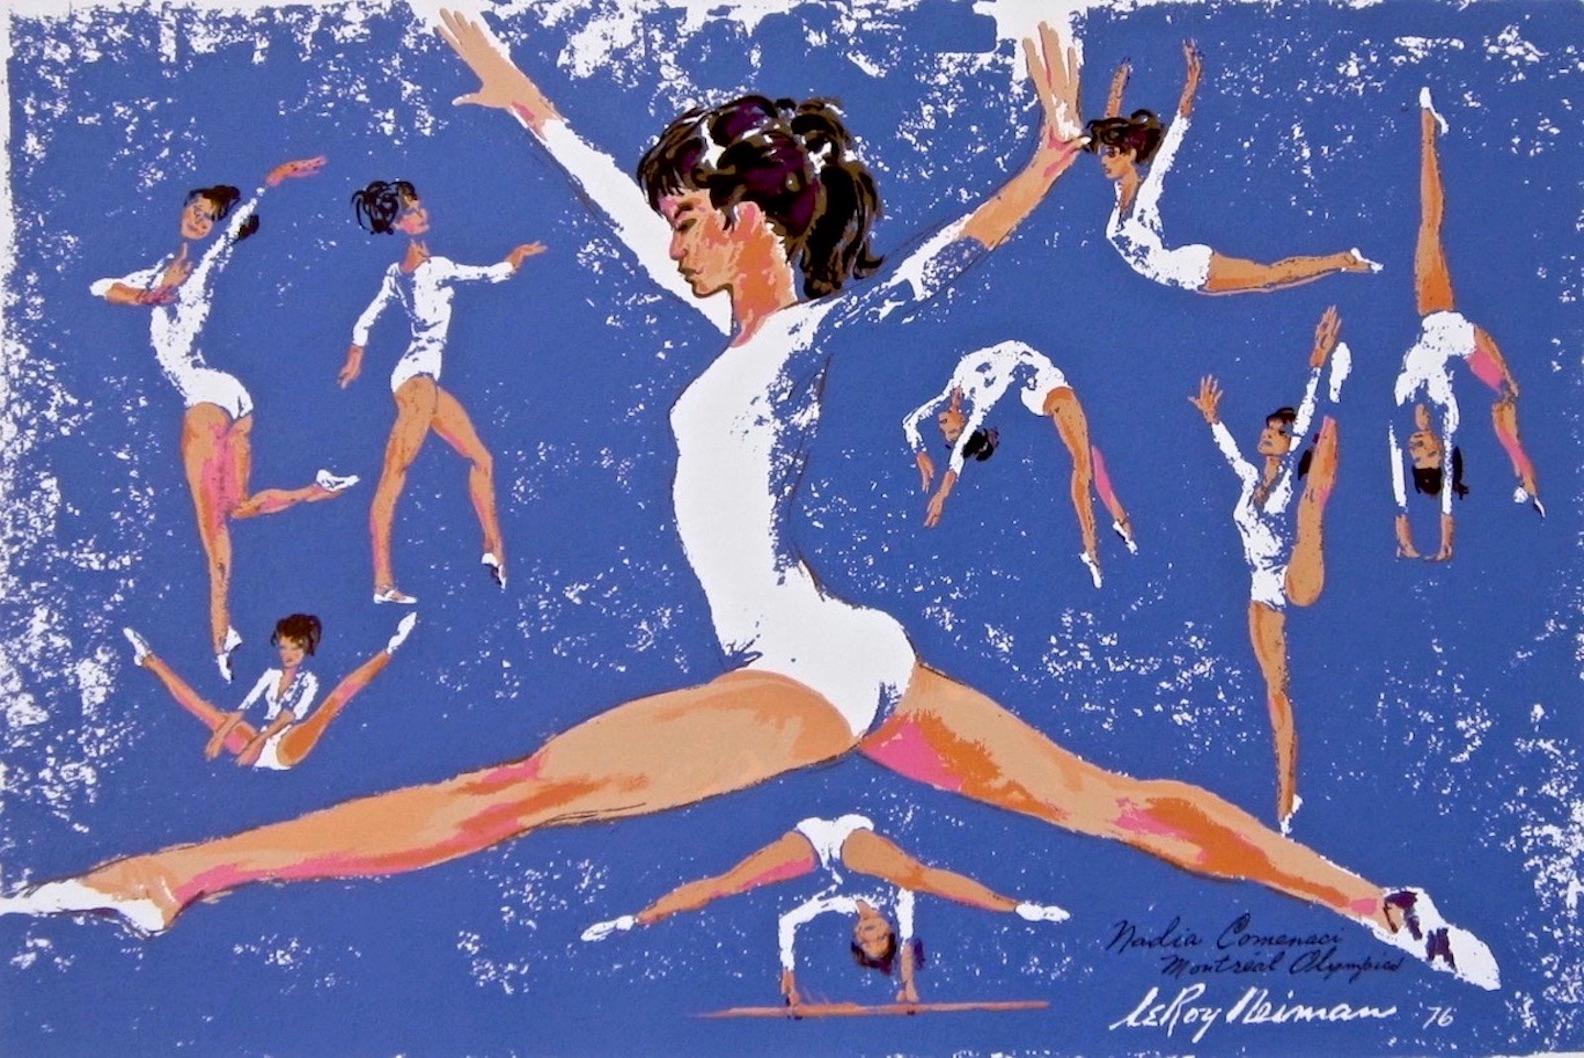 Leroy Neiman Figurative Print – Nadia, Comaneci Montrealer Olympische Spiele, Poster, 1976